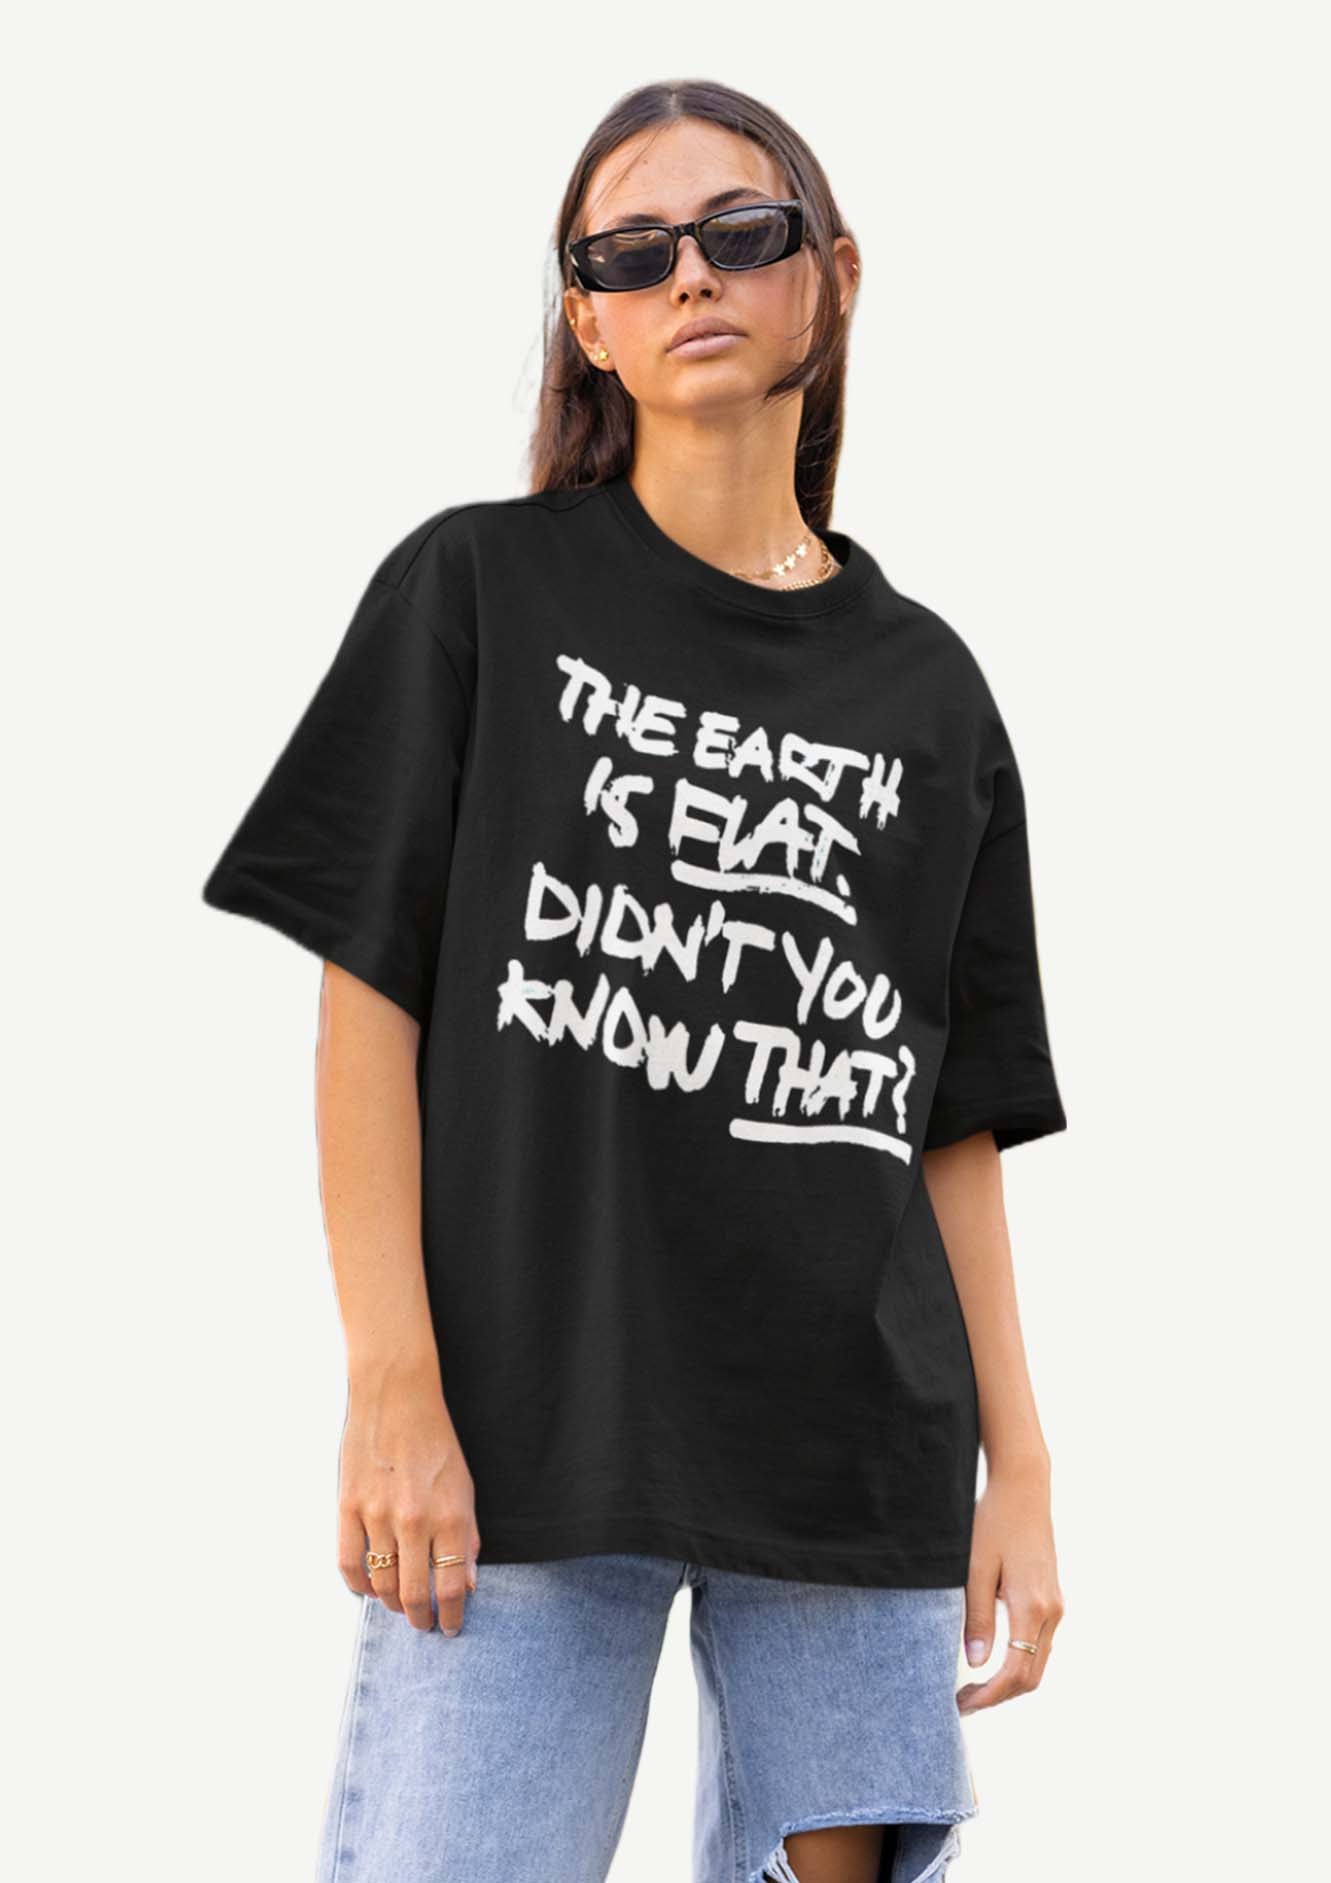 Suga The Earth Is Flat Unisex Oversized Tshirt